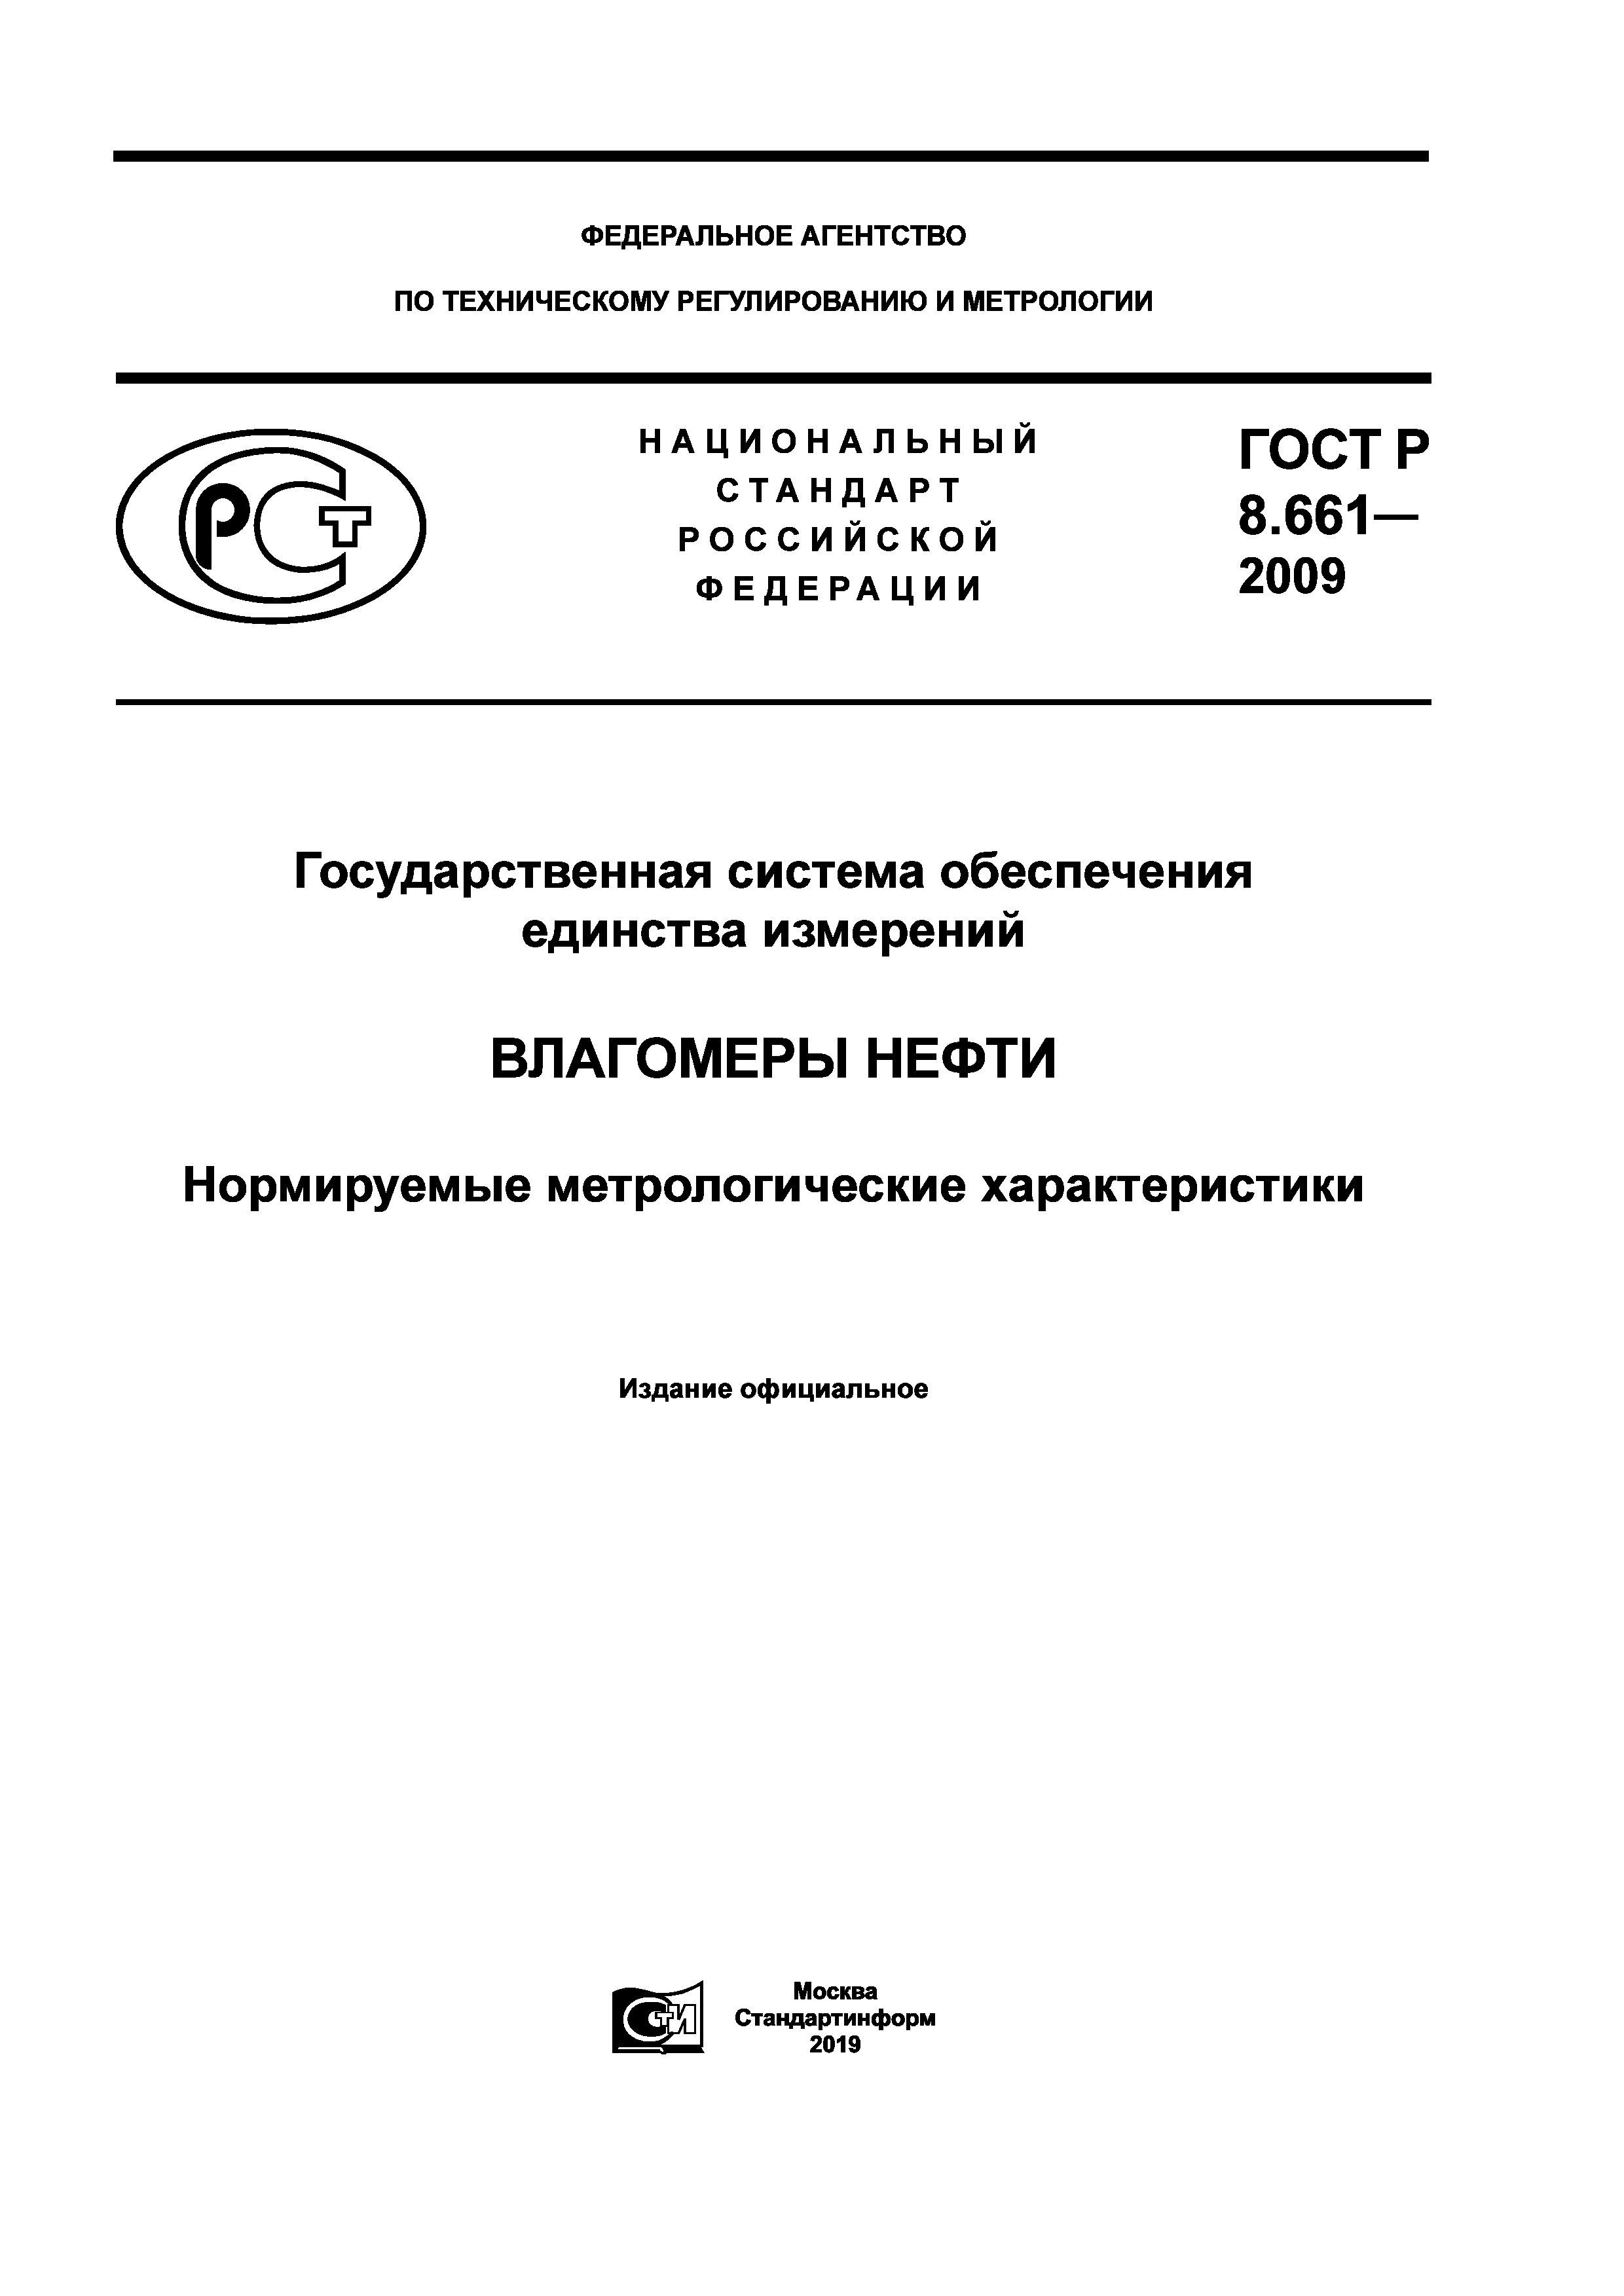 ГОСТ Р 8.661-2009